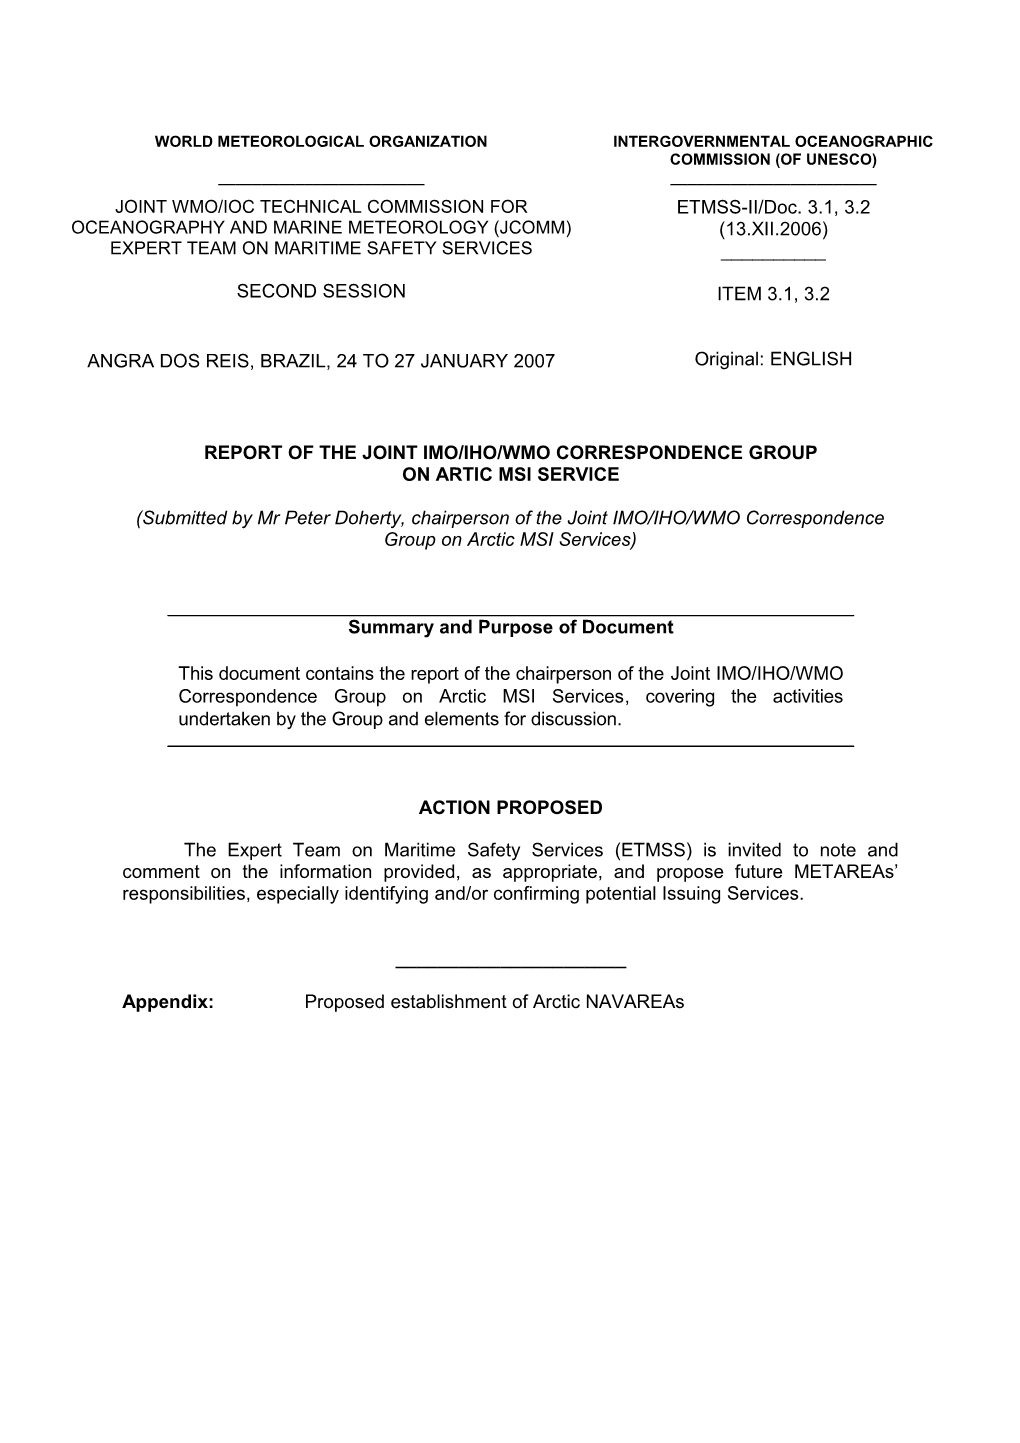 Report of the Joint Imo/Iho/Wmo Correspondence Group